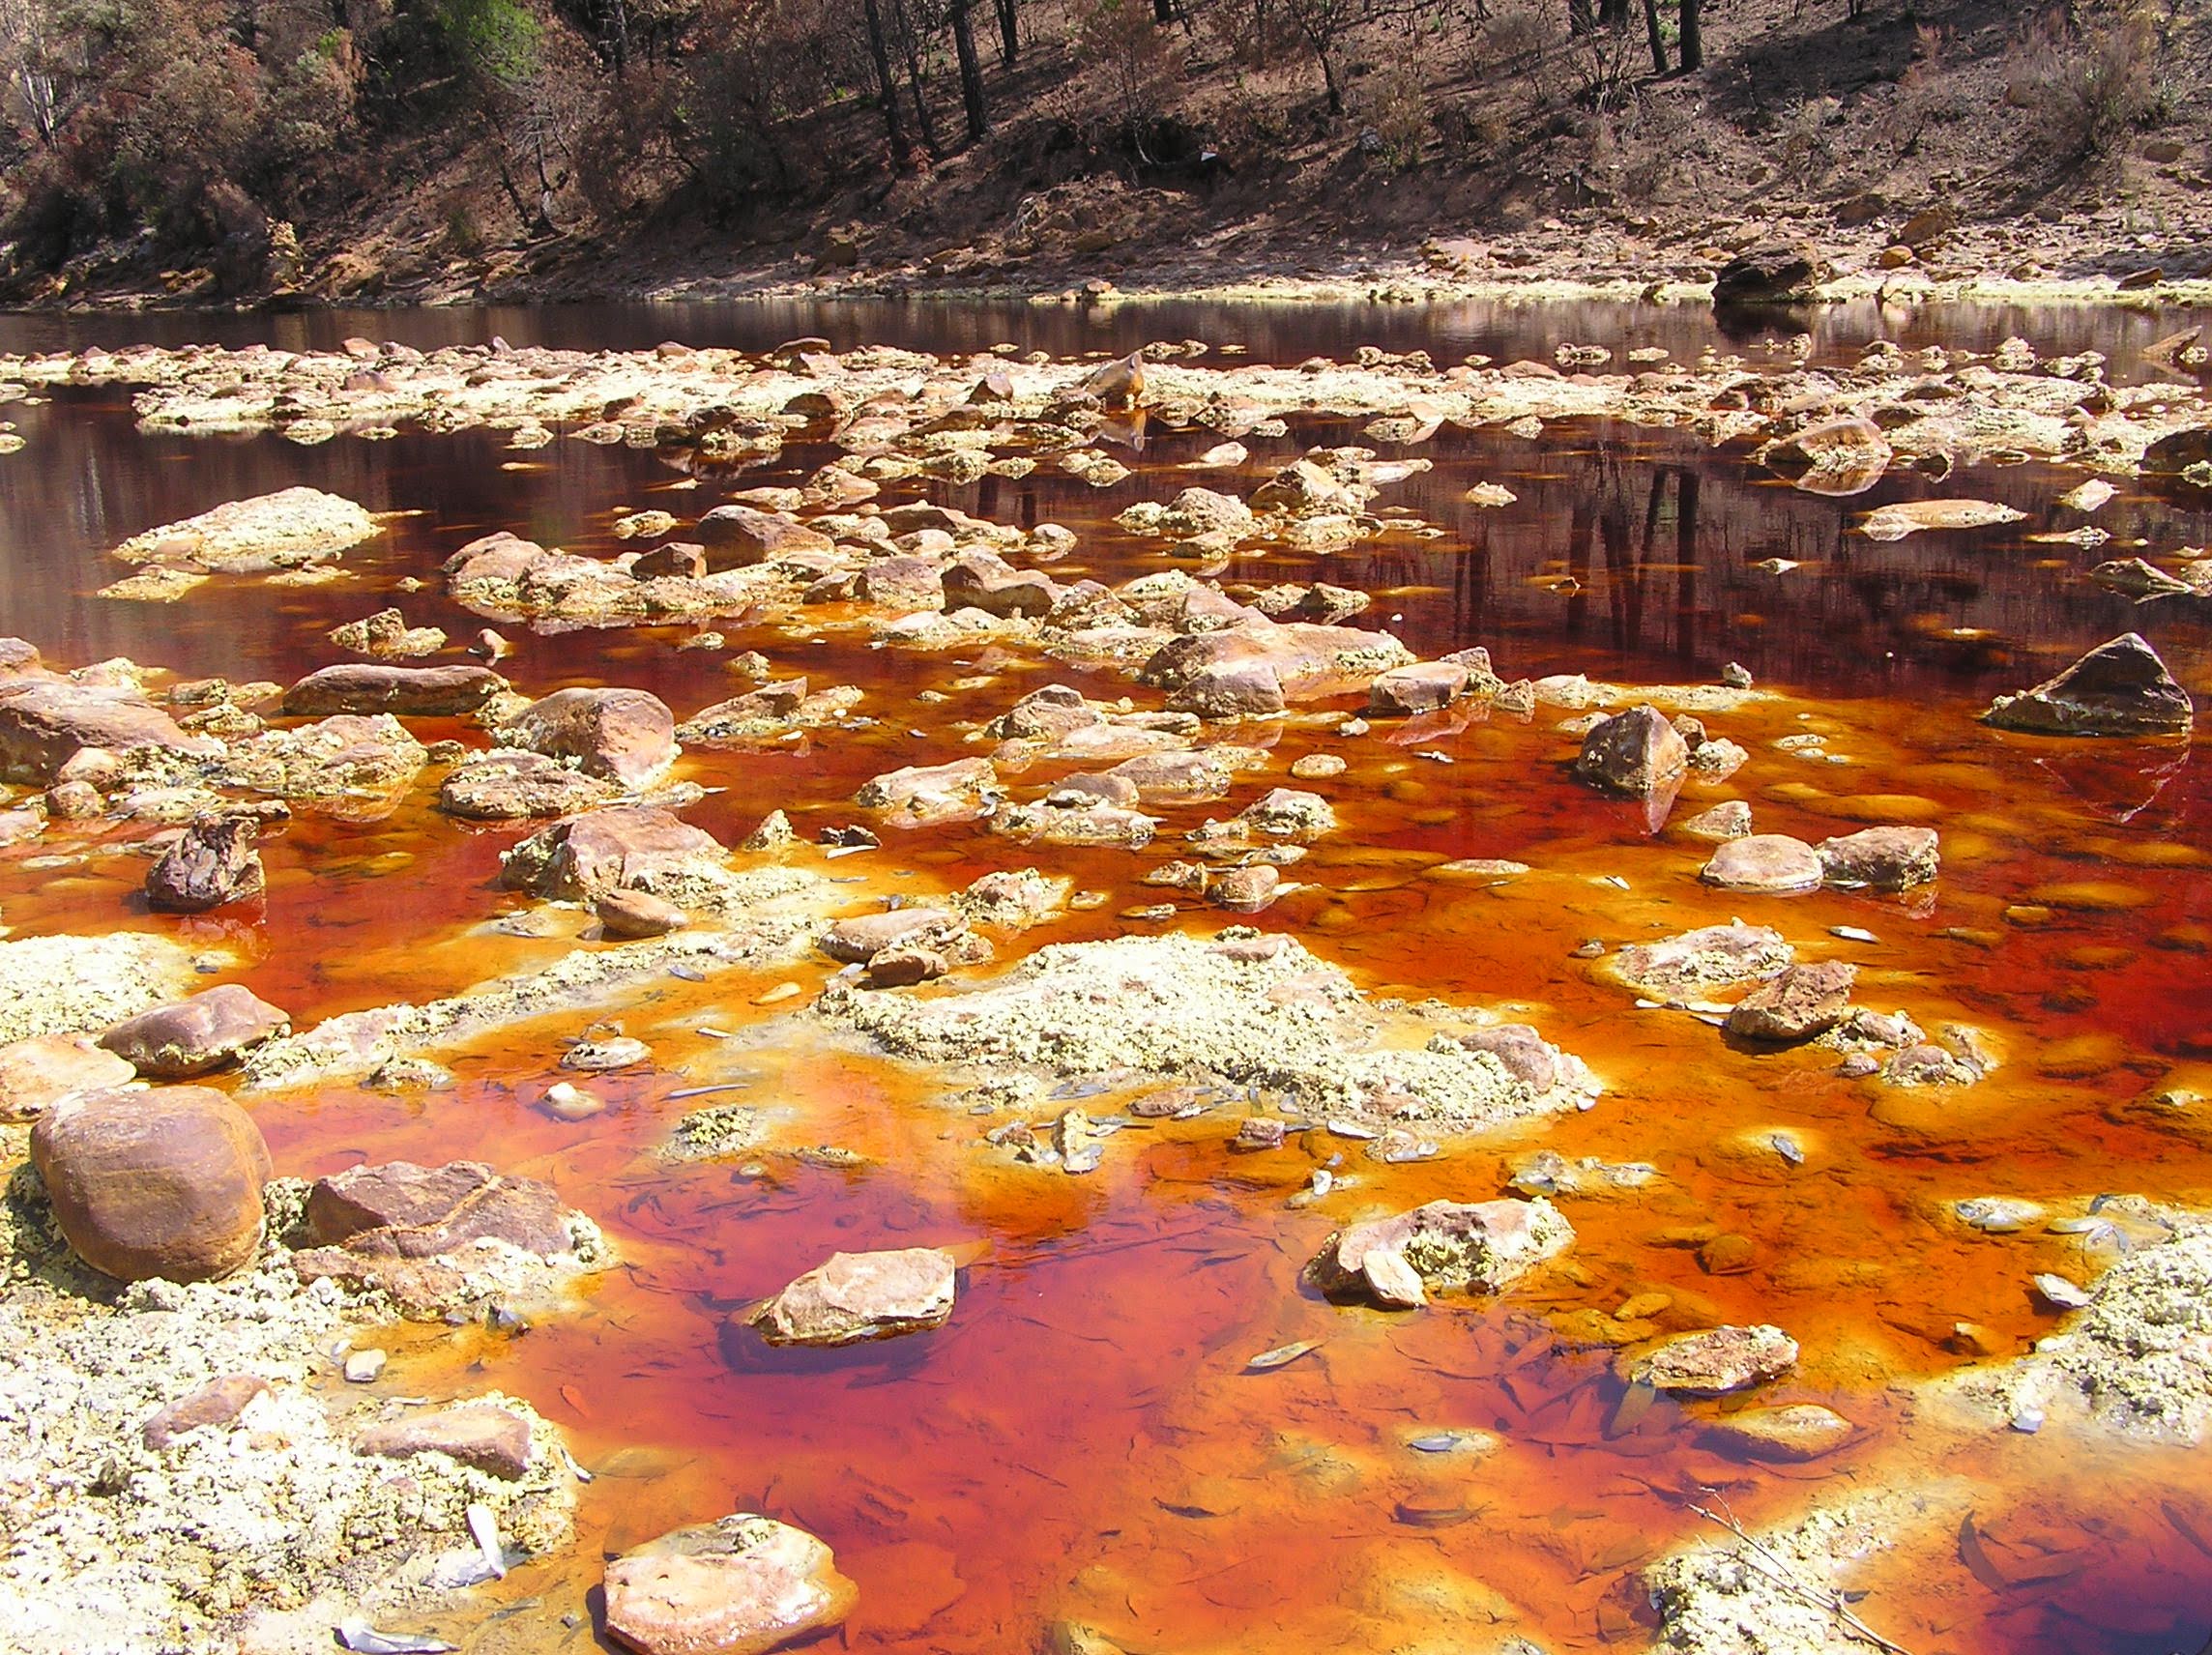 Contaminacion de aguas por explotación mineras, río Tinto. Esperanza Montero)